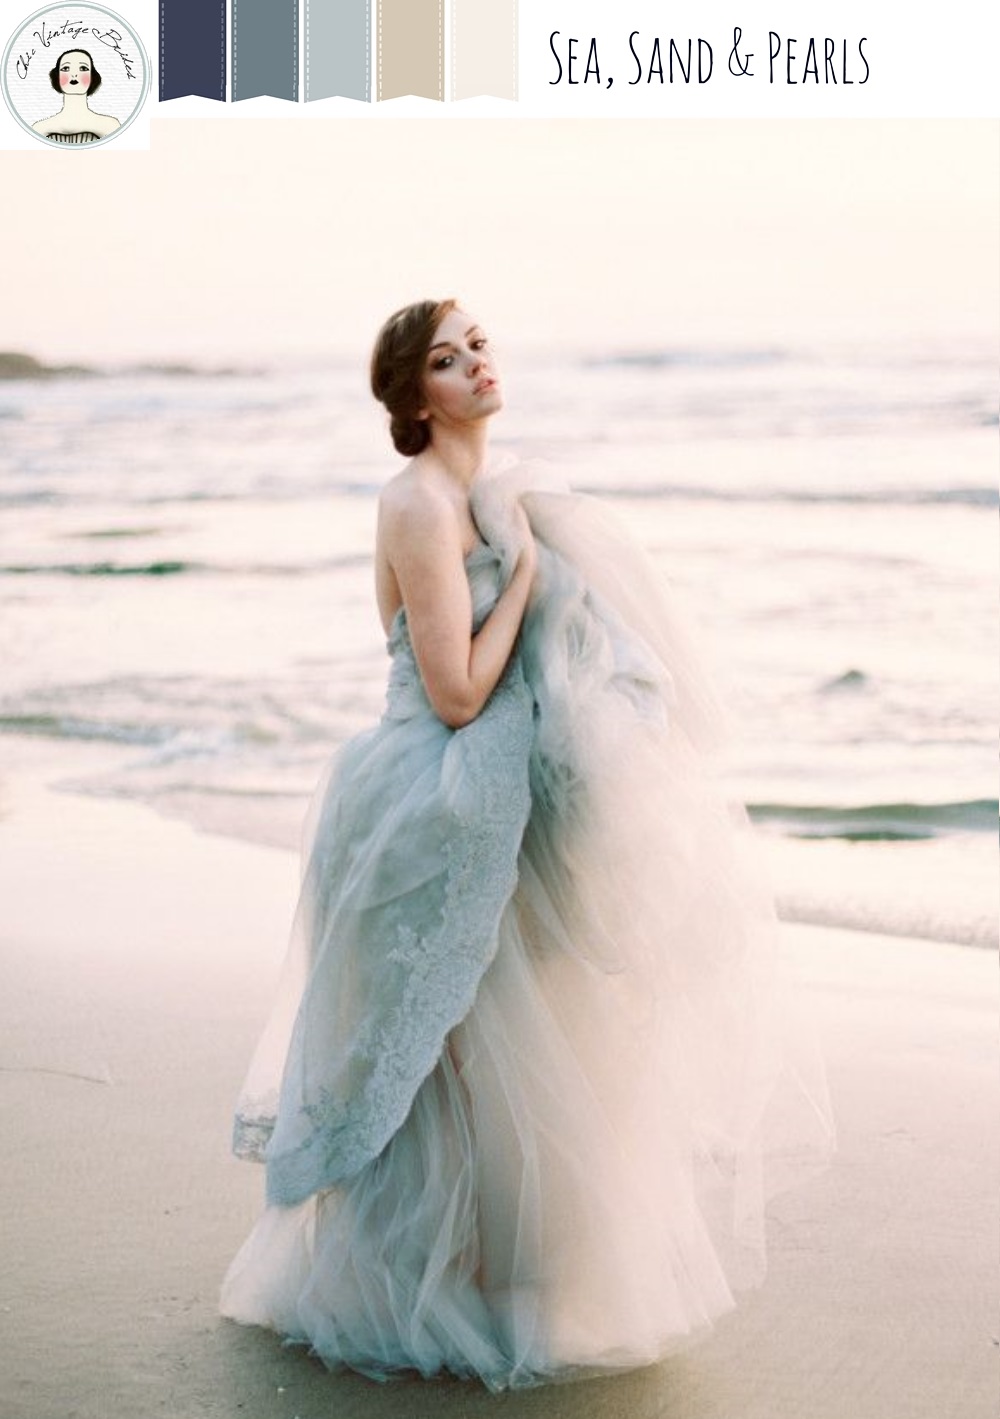 Sea, Sand & Pearls - Romantic Beach Wedding Inspiration in Dusky Shades of Blue